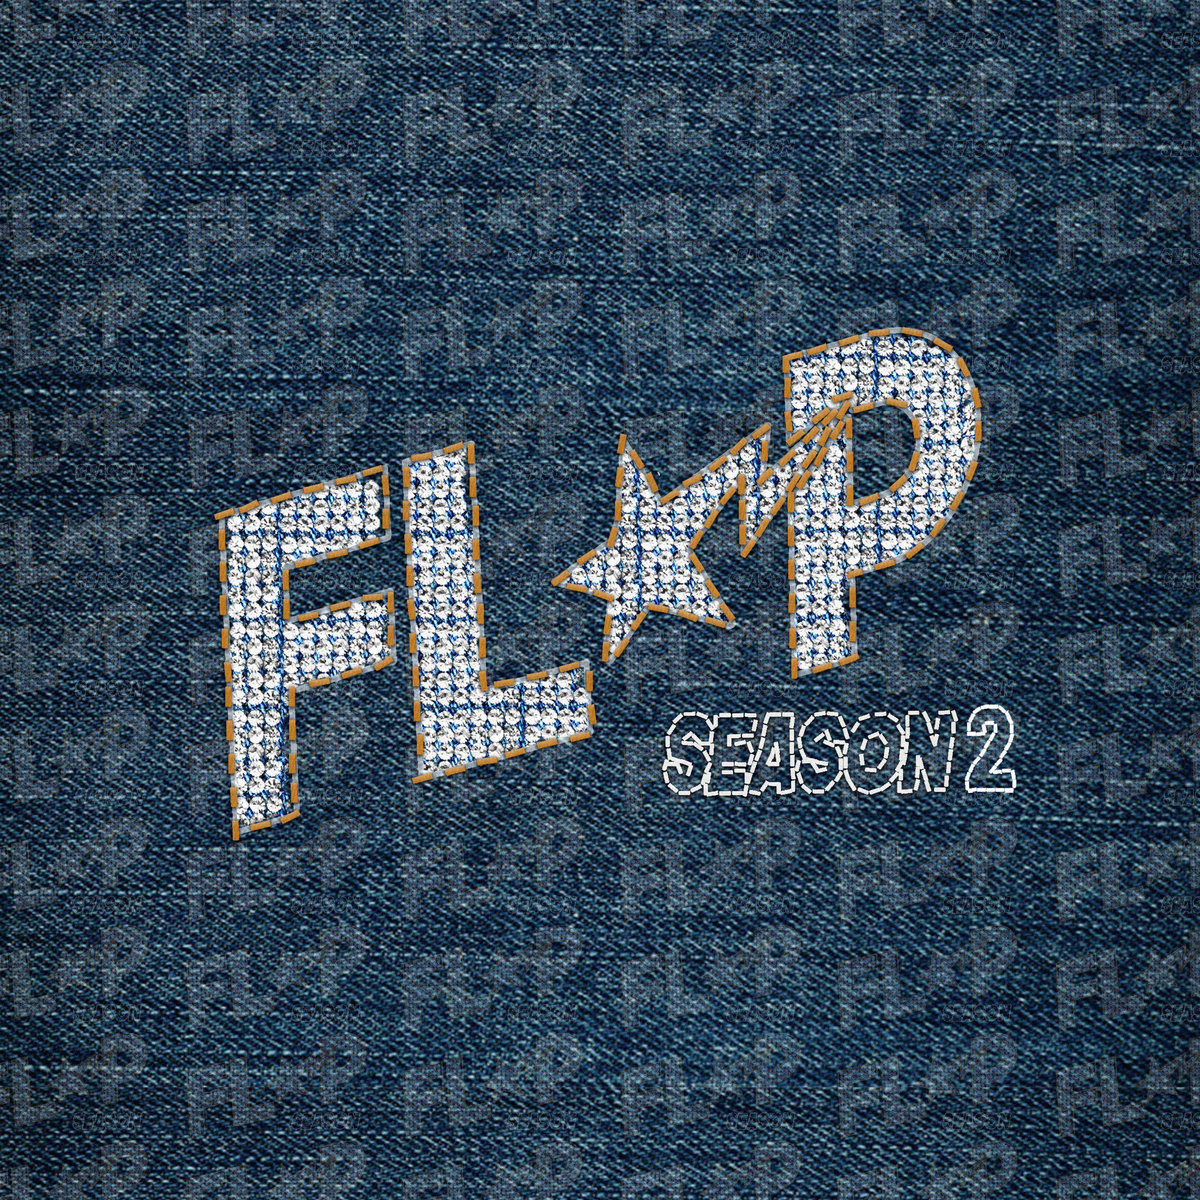 Paul Mond is back with new edit pack "FLIP SEASON 2"